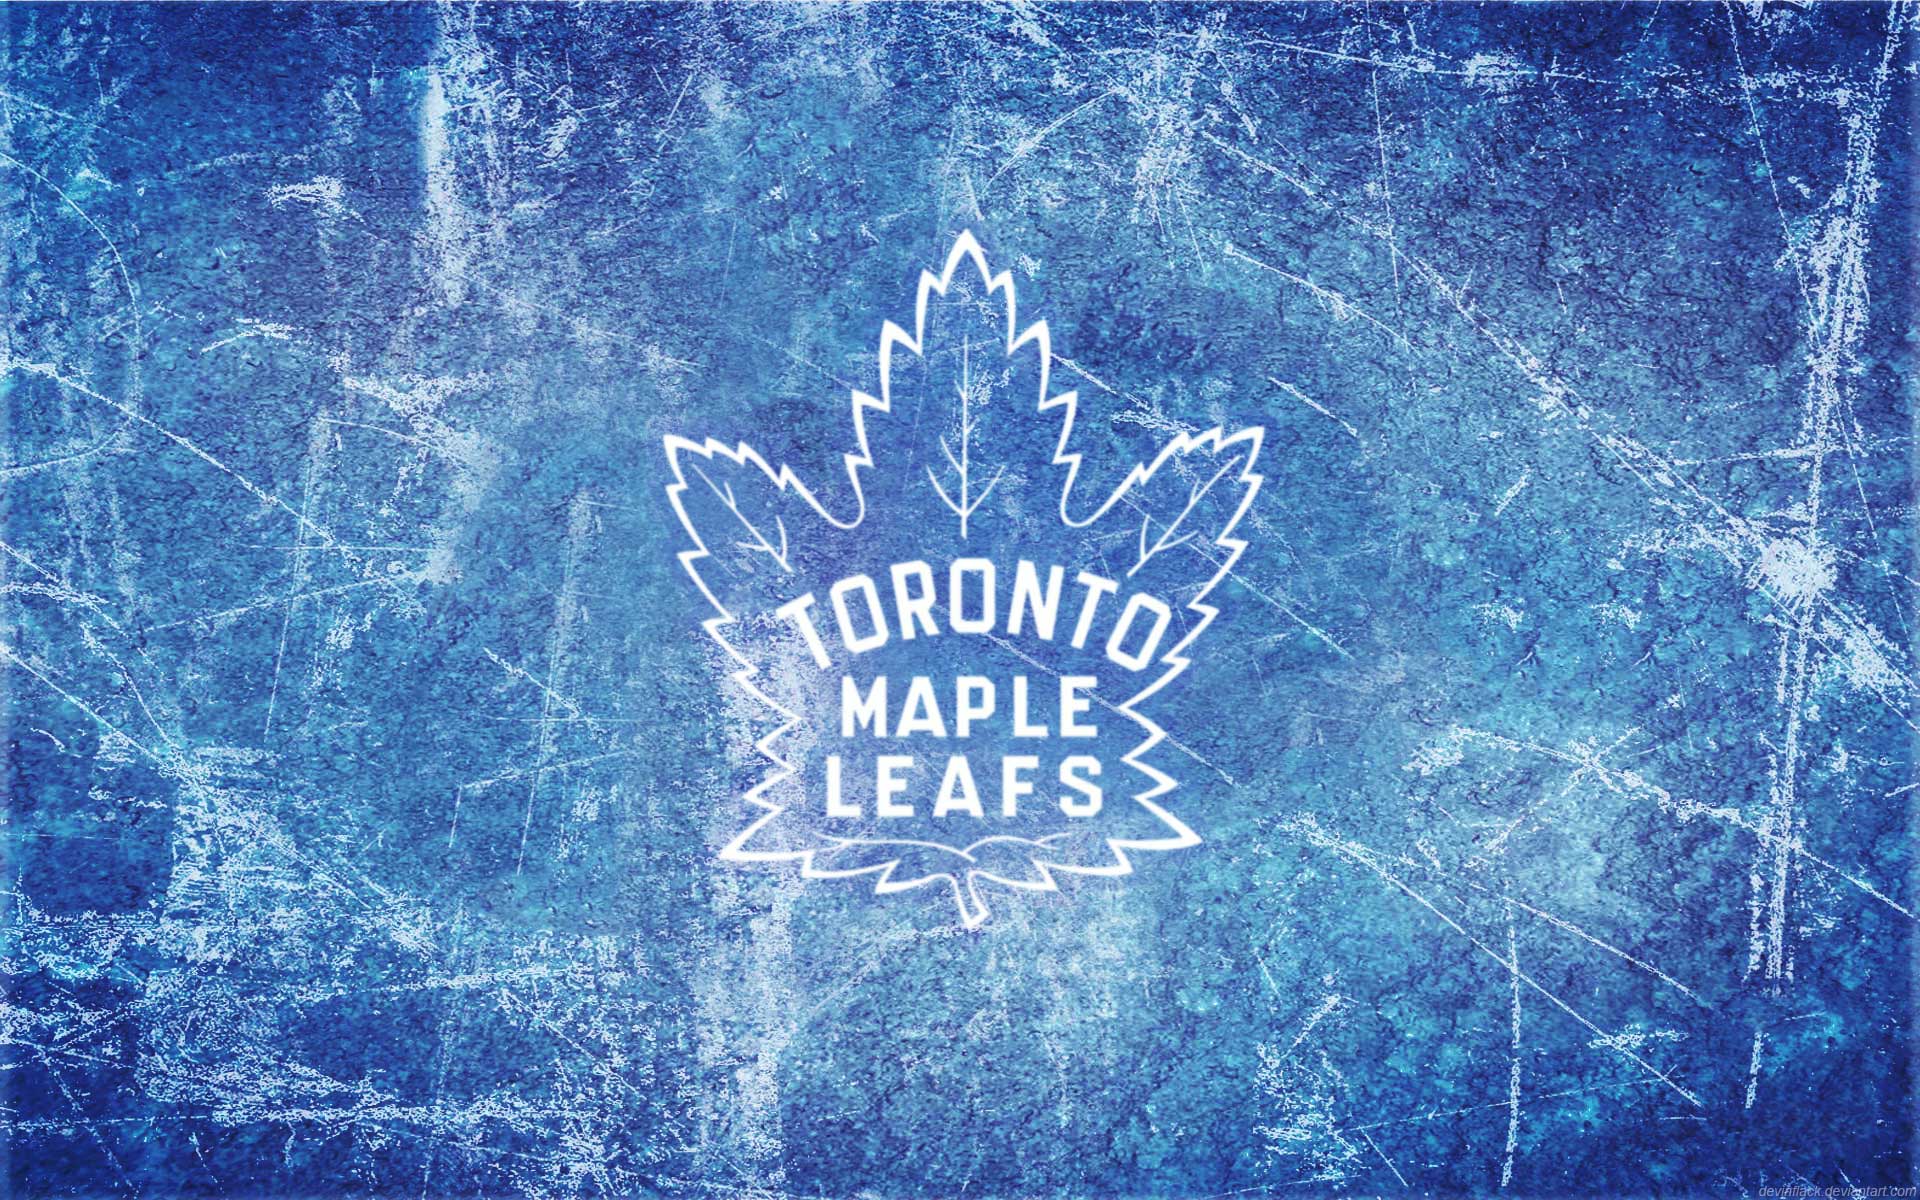 🔥 Download Toronto Maple Leafs Wallpaper By Peggygonzalez Toronto